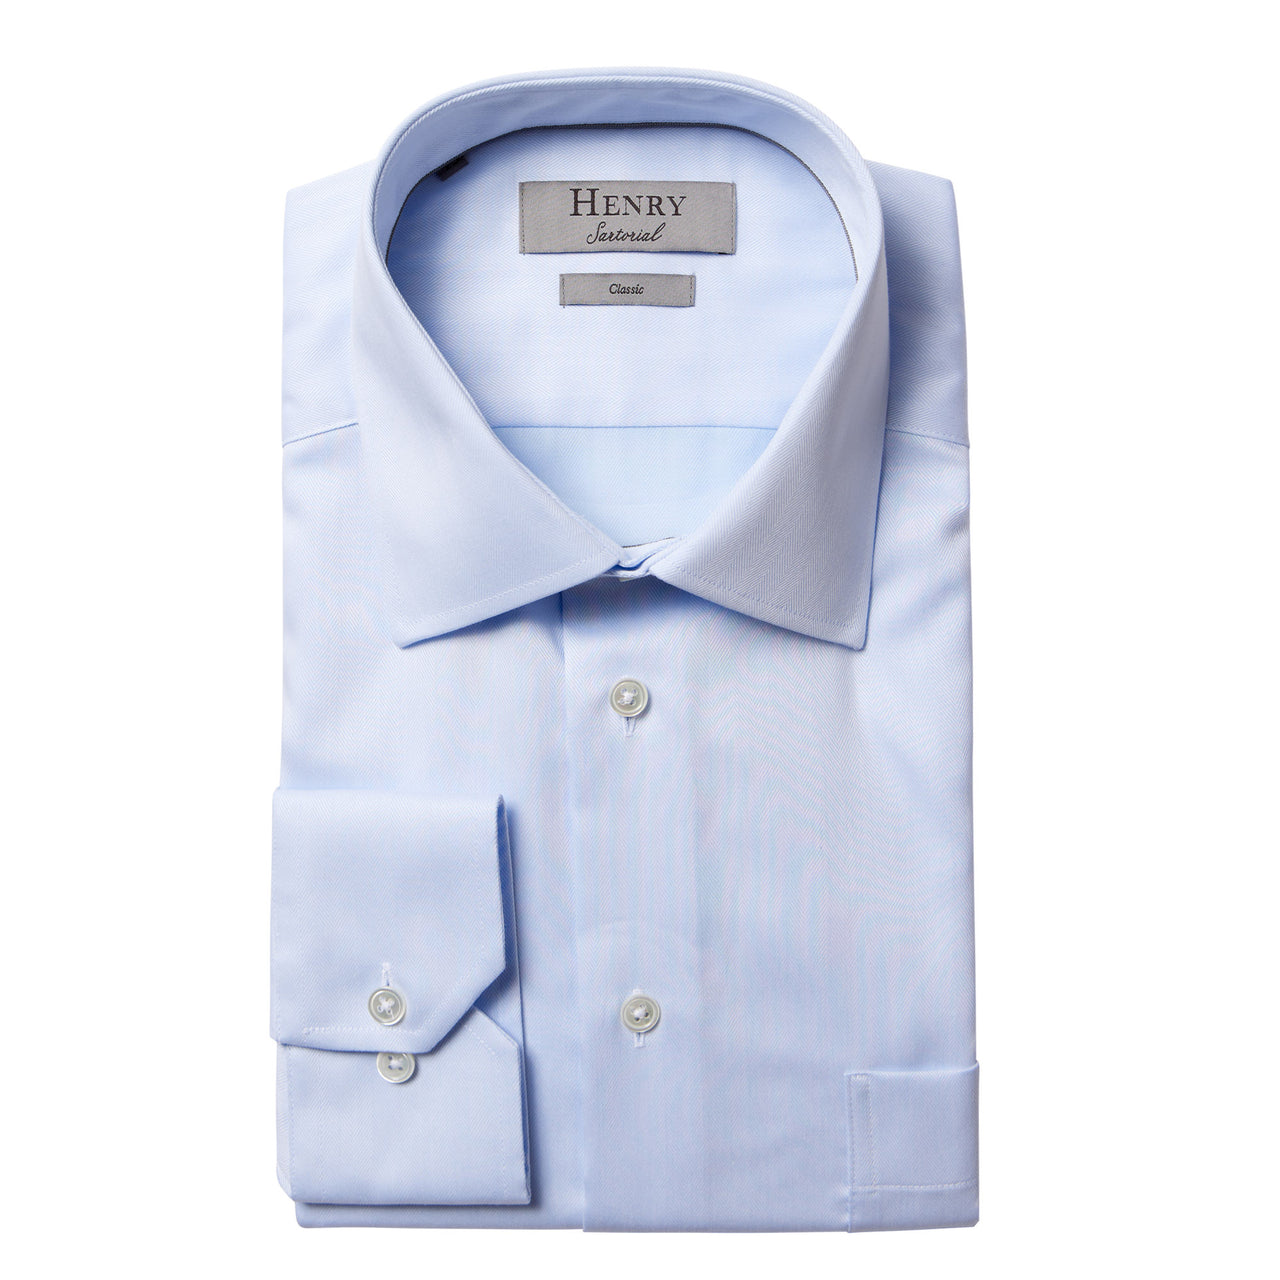 HENRY SARTORIAL Herringbone Business Shirt Single Cuff Classic Fit LIGHT BLUE